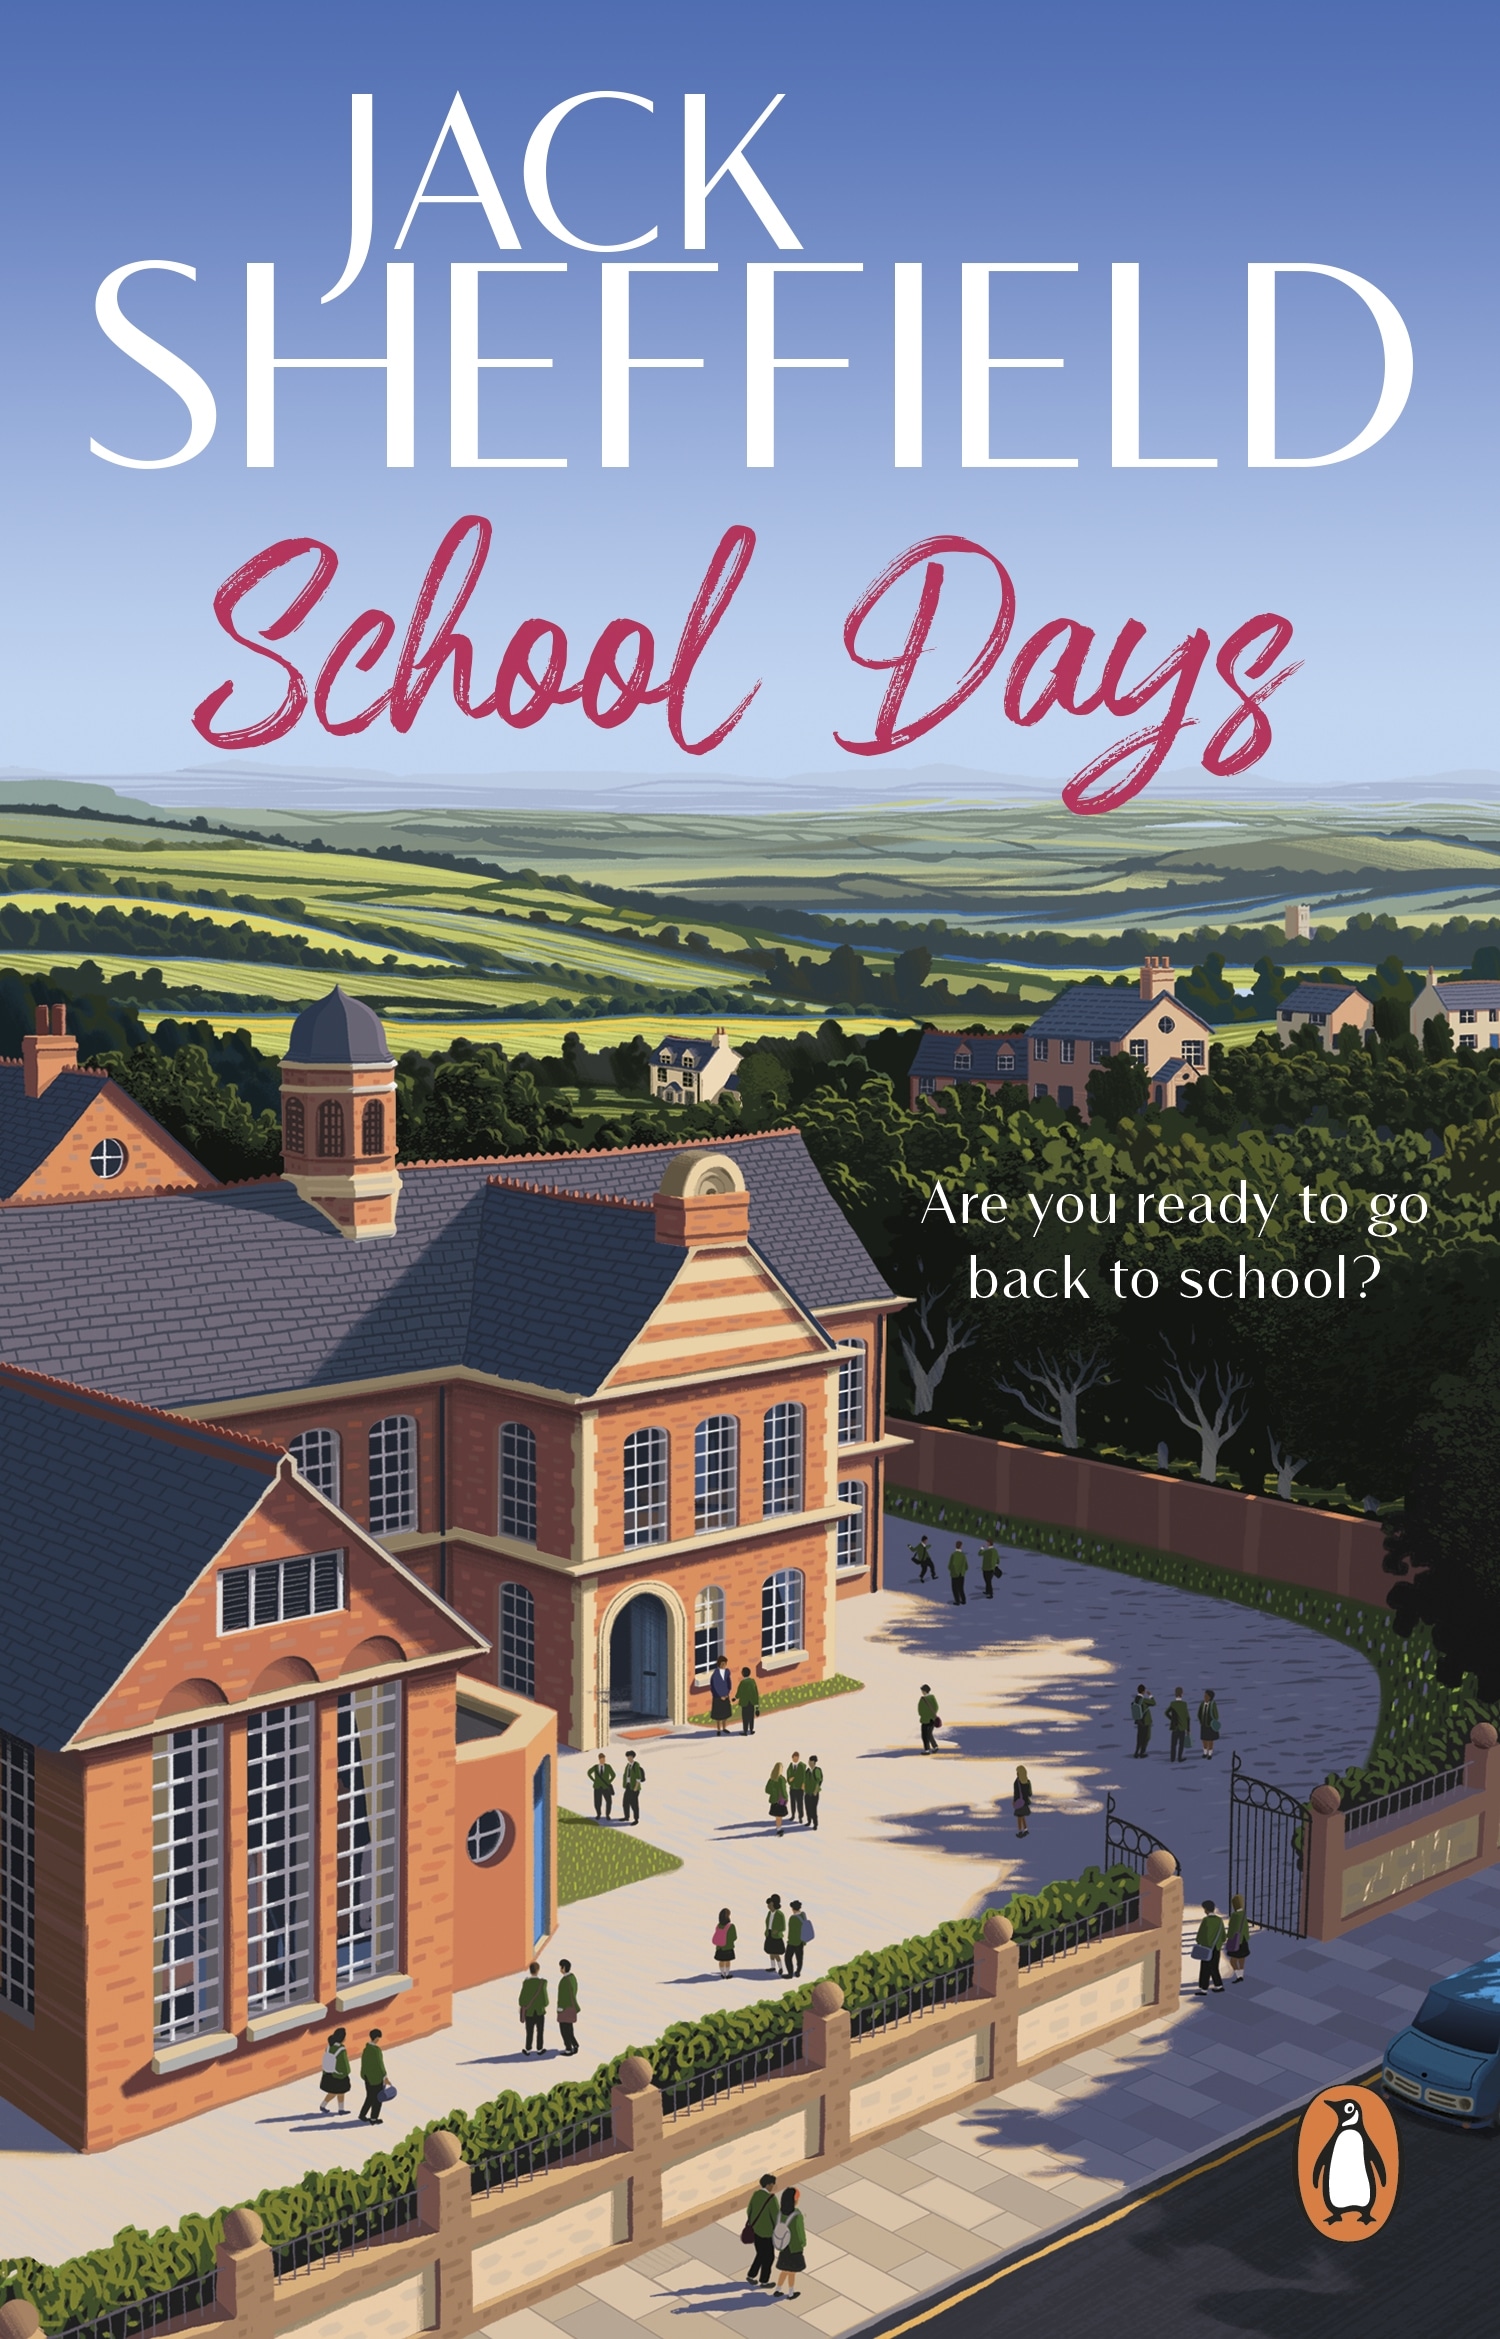 Book “School Days” by Jack Sheffield — July 28, 2022